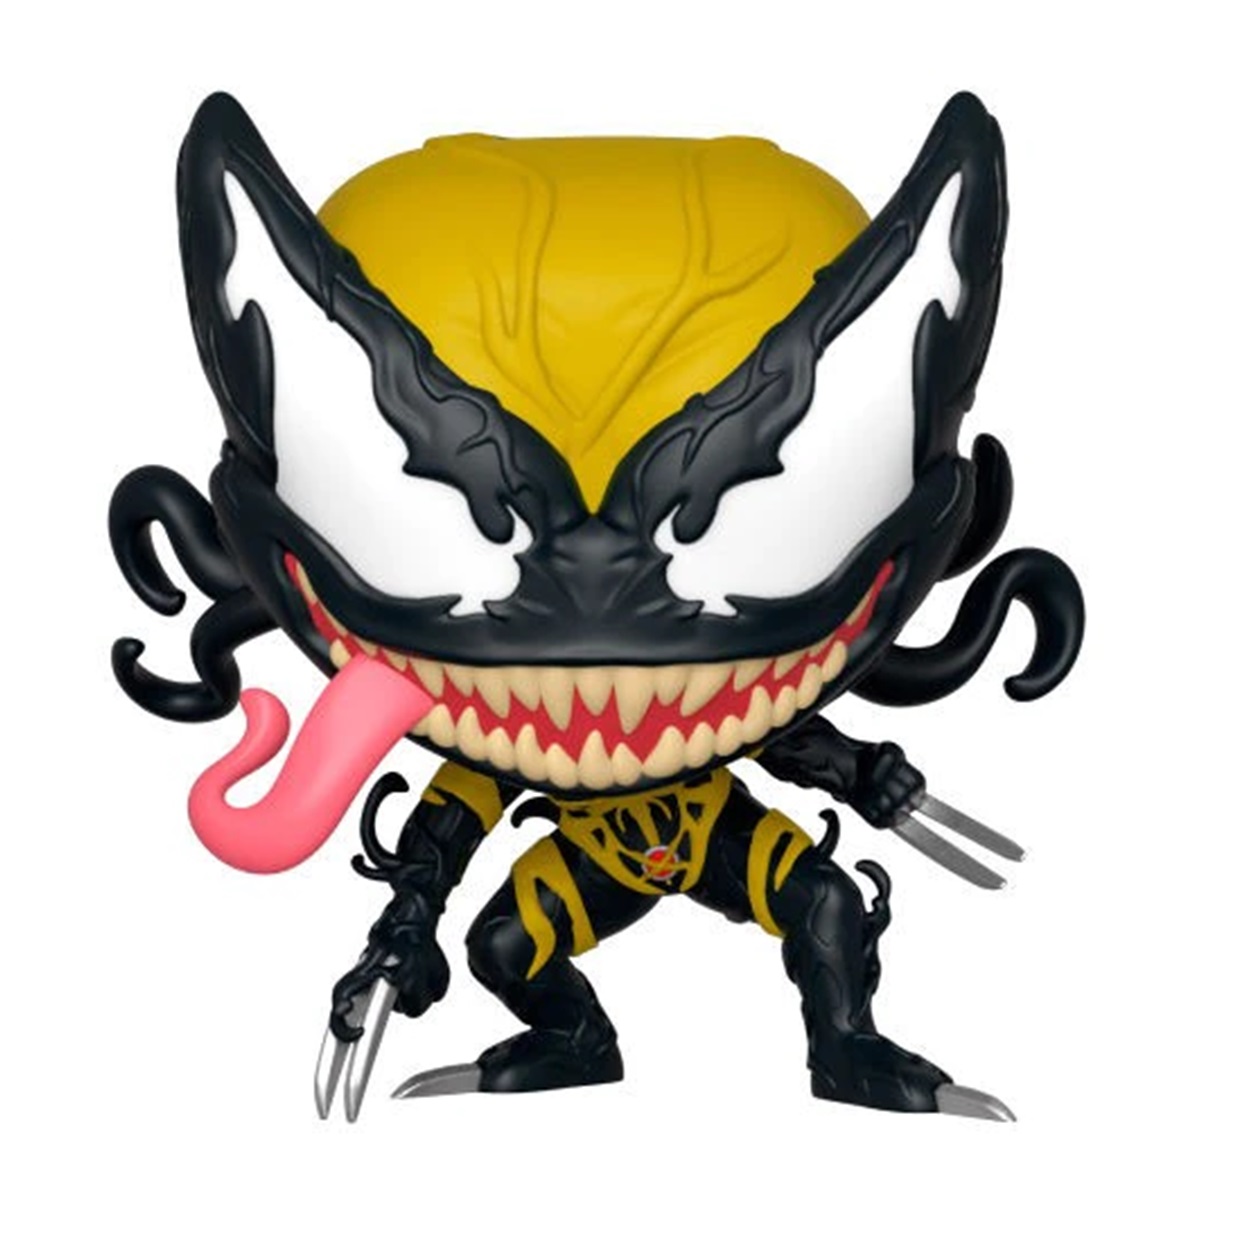 Venomized X 23 #514 Marvel Venom Funko Pop!